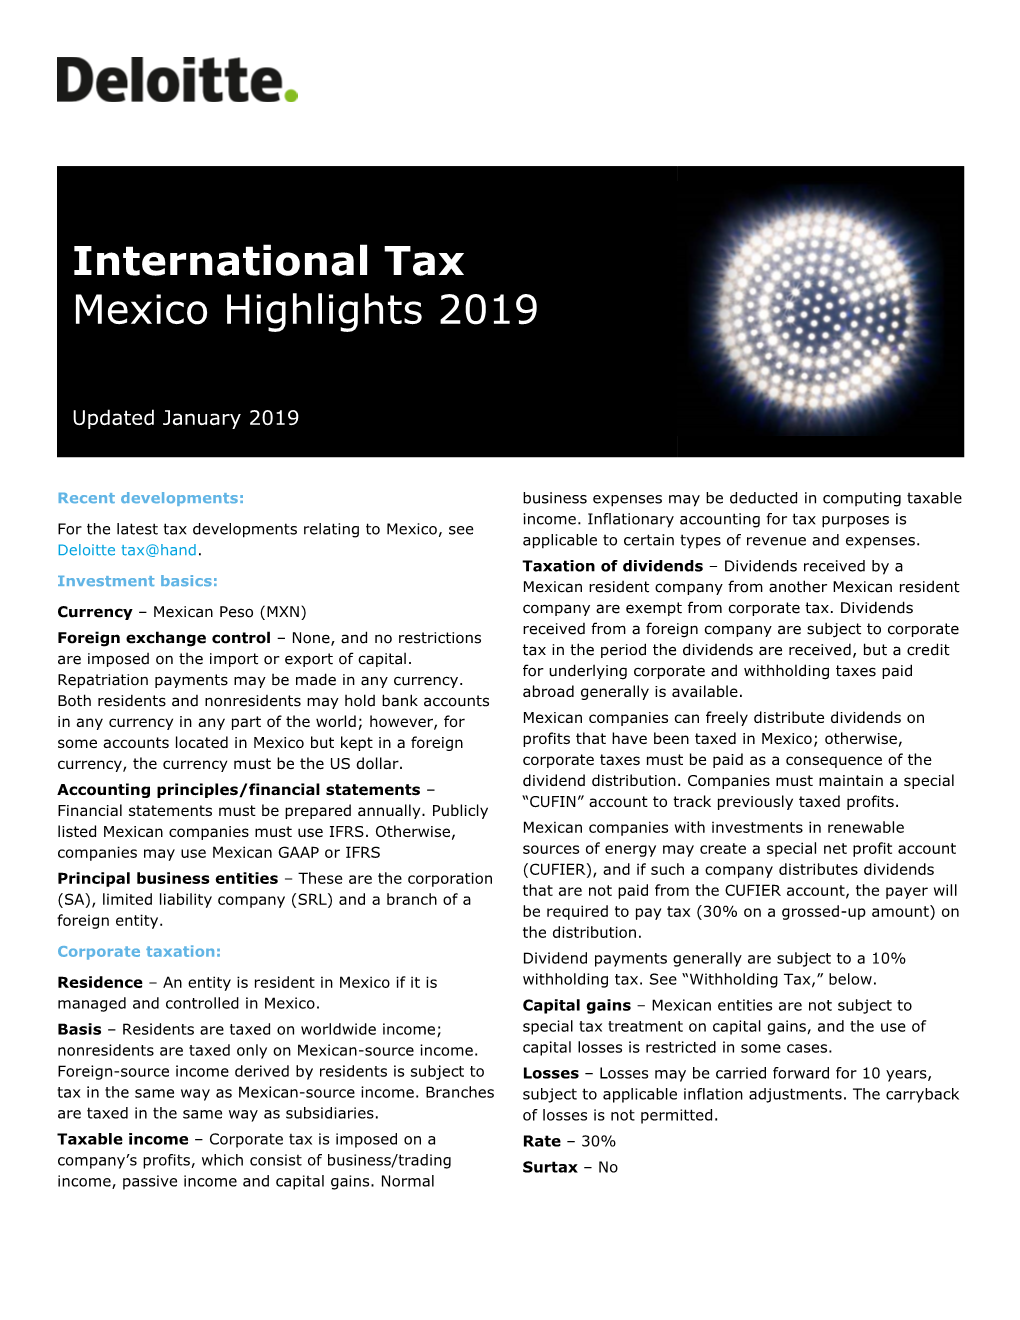 International Tax Mexico Highlights 2019